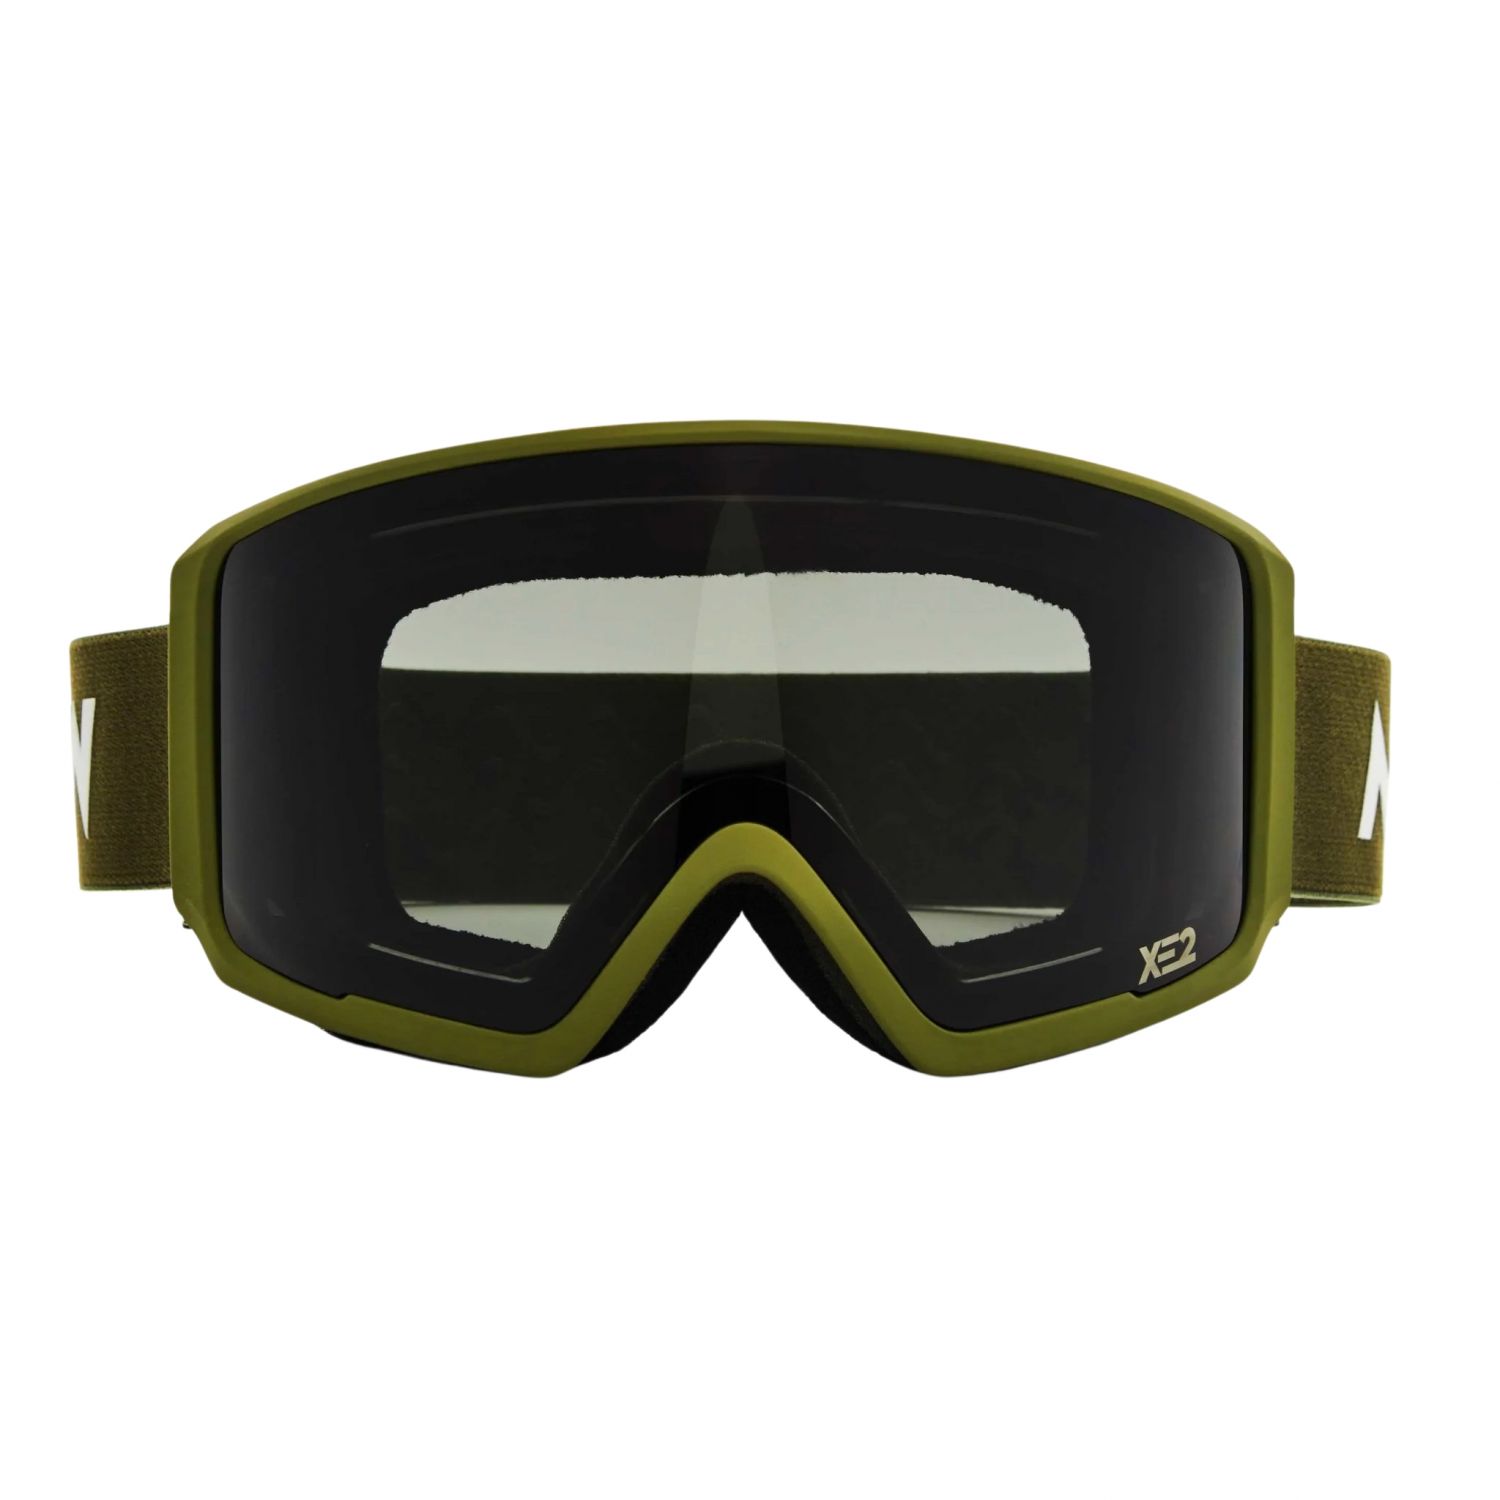 MessyWeekend Flip XE2, masque de ski, vert